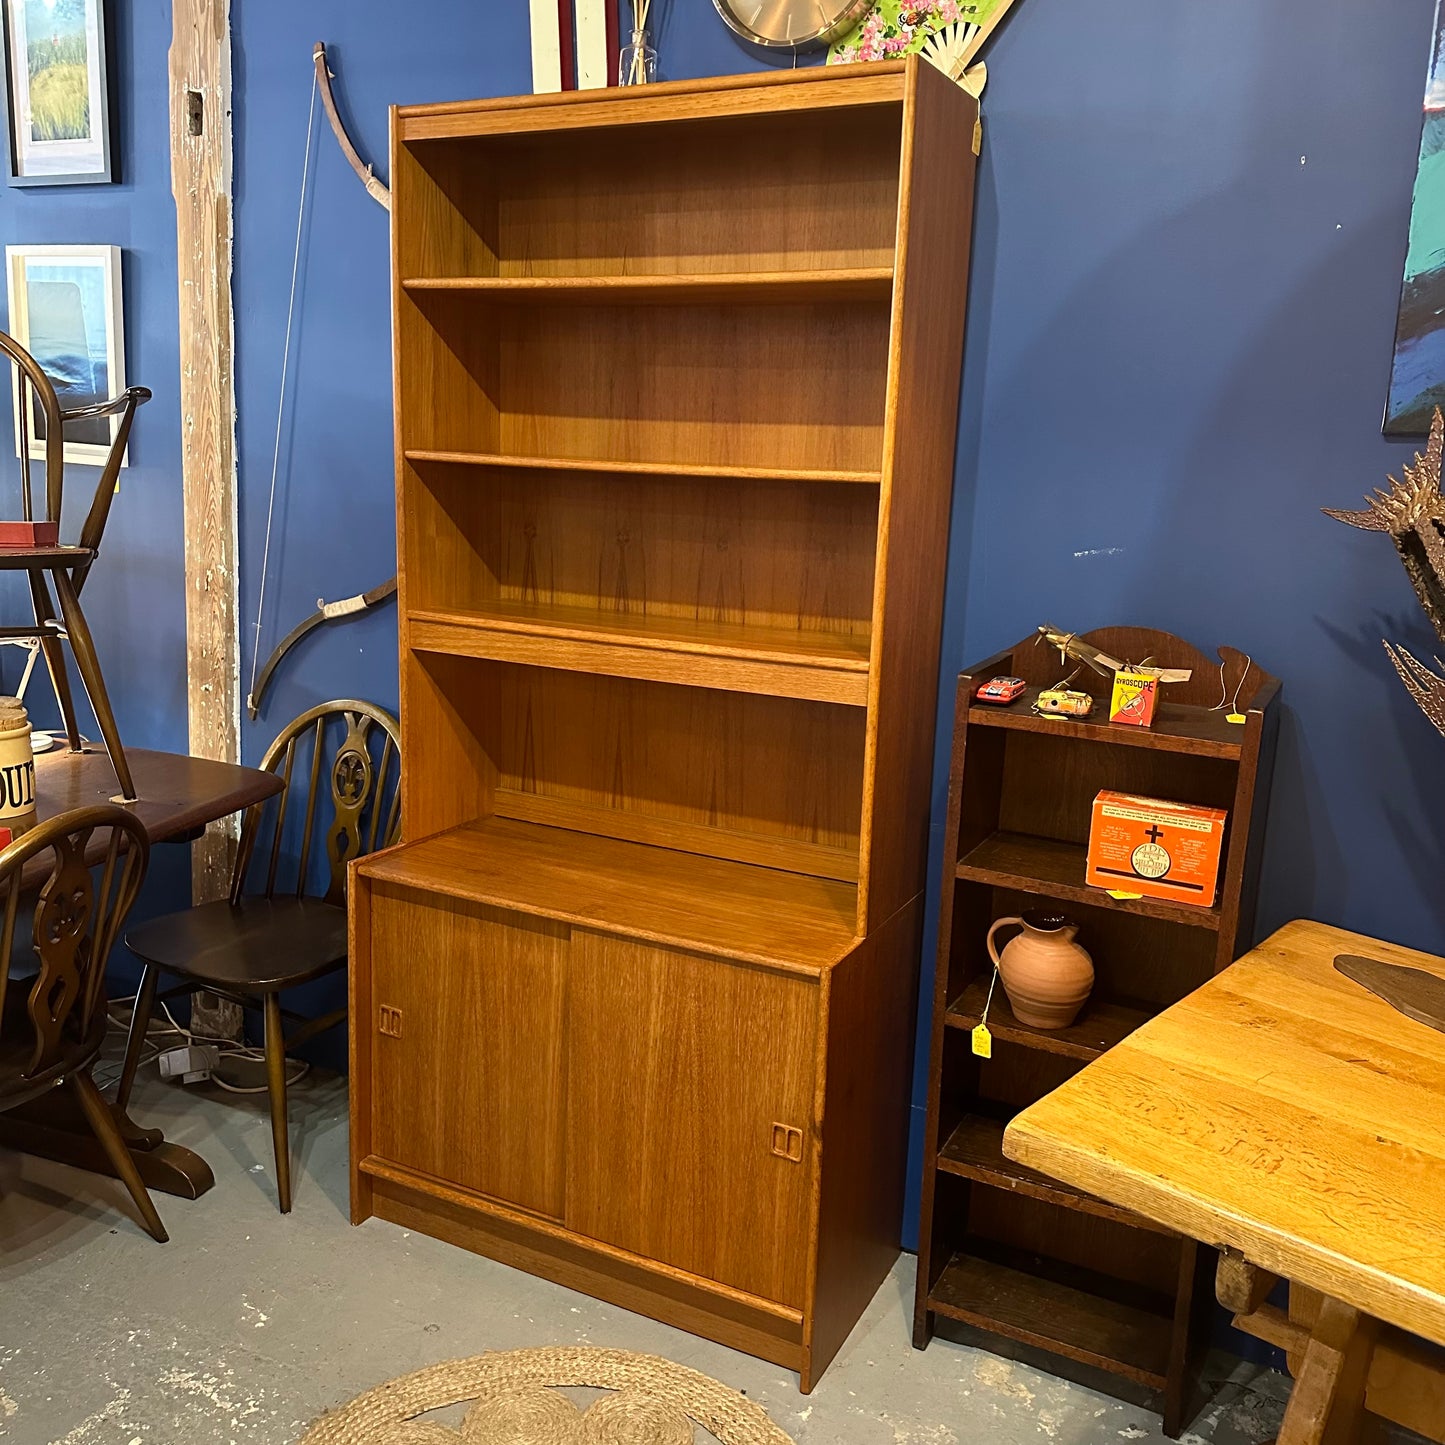 Midcentury Bookshelf Storage Shelving Unit